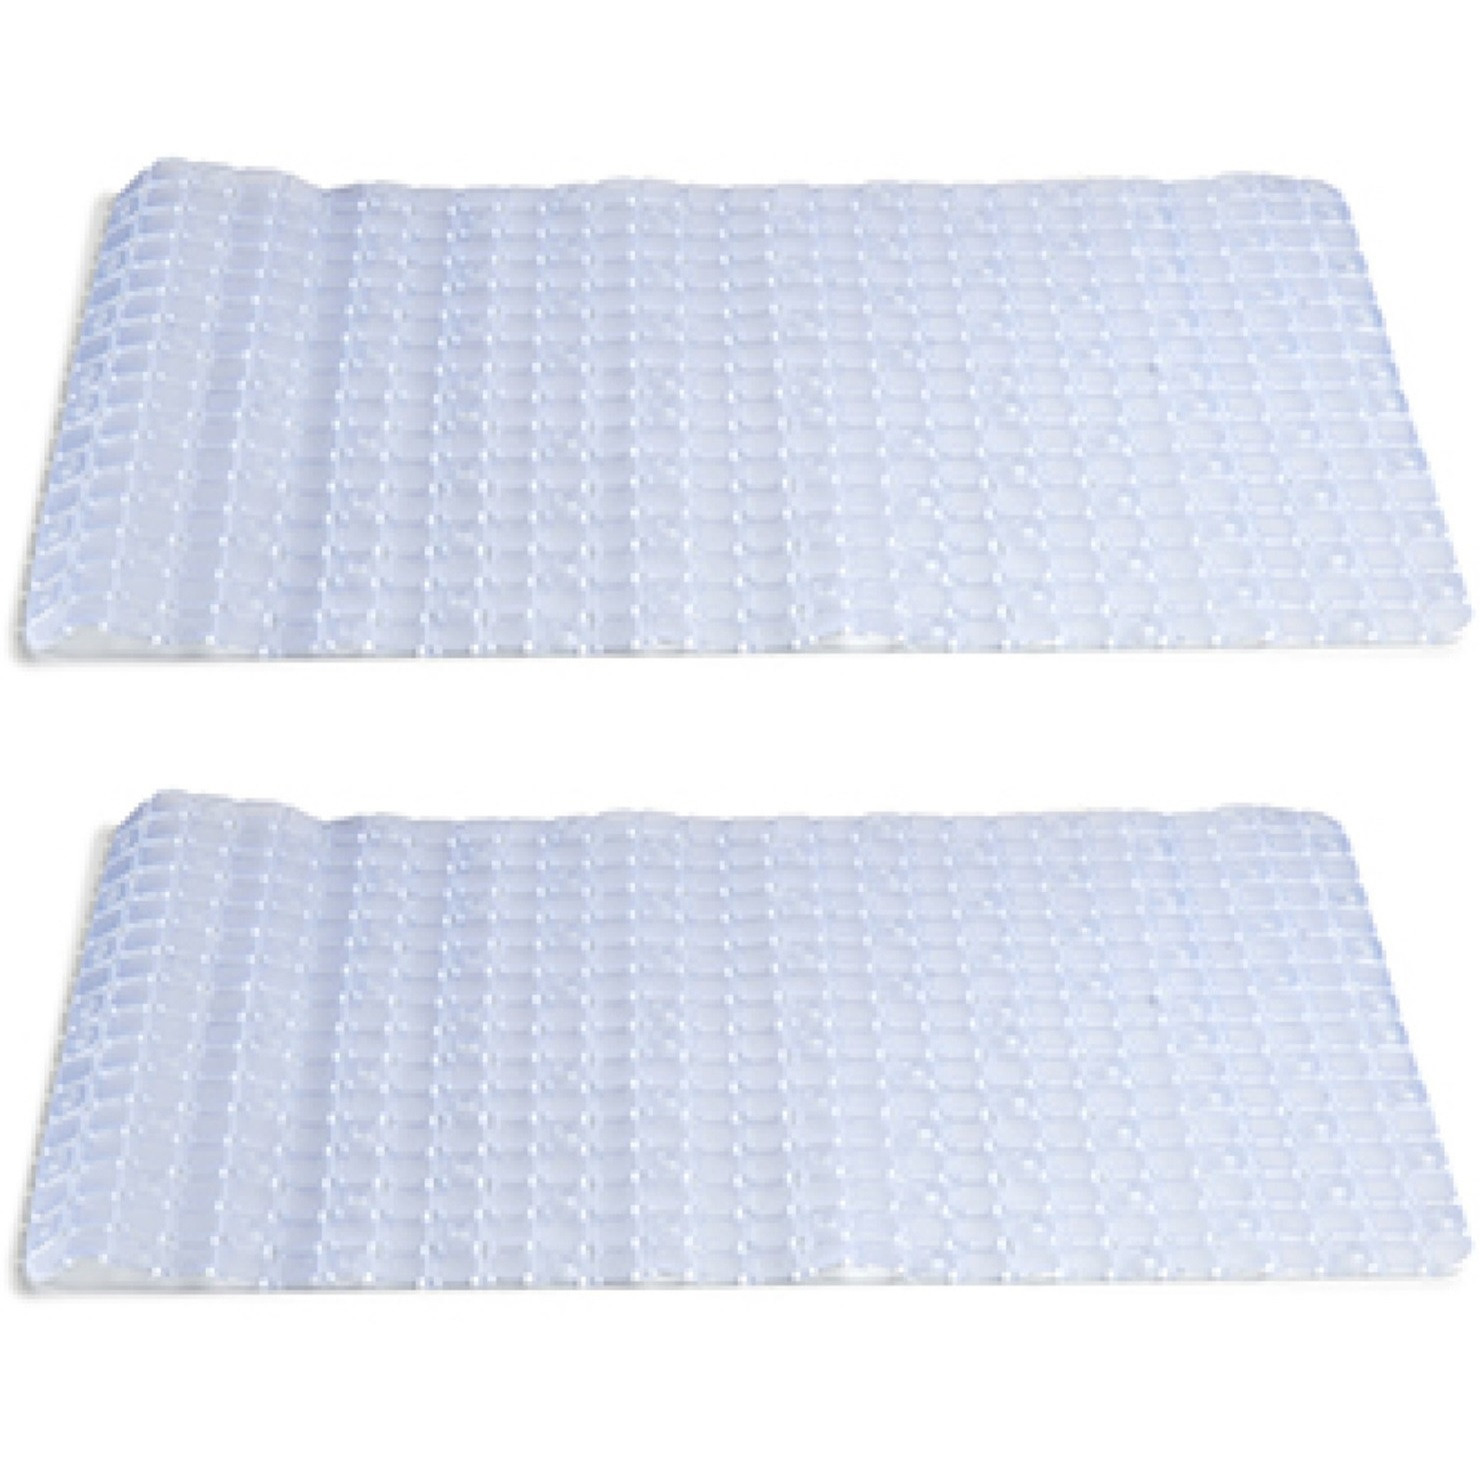 2x stuks badmatten-douchematten anti-slip transparant vierkant patroon 69 x 39 cm